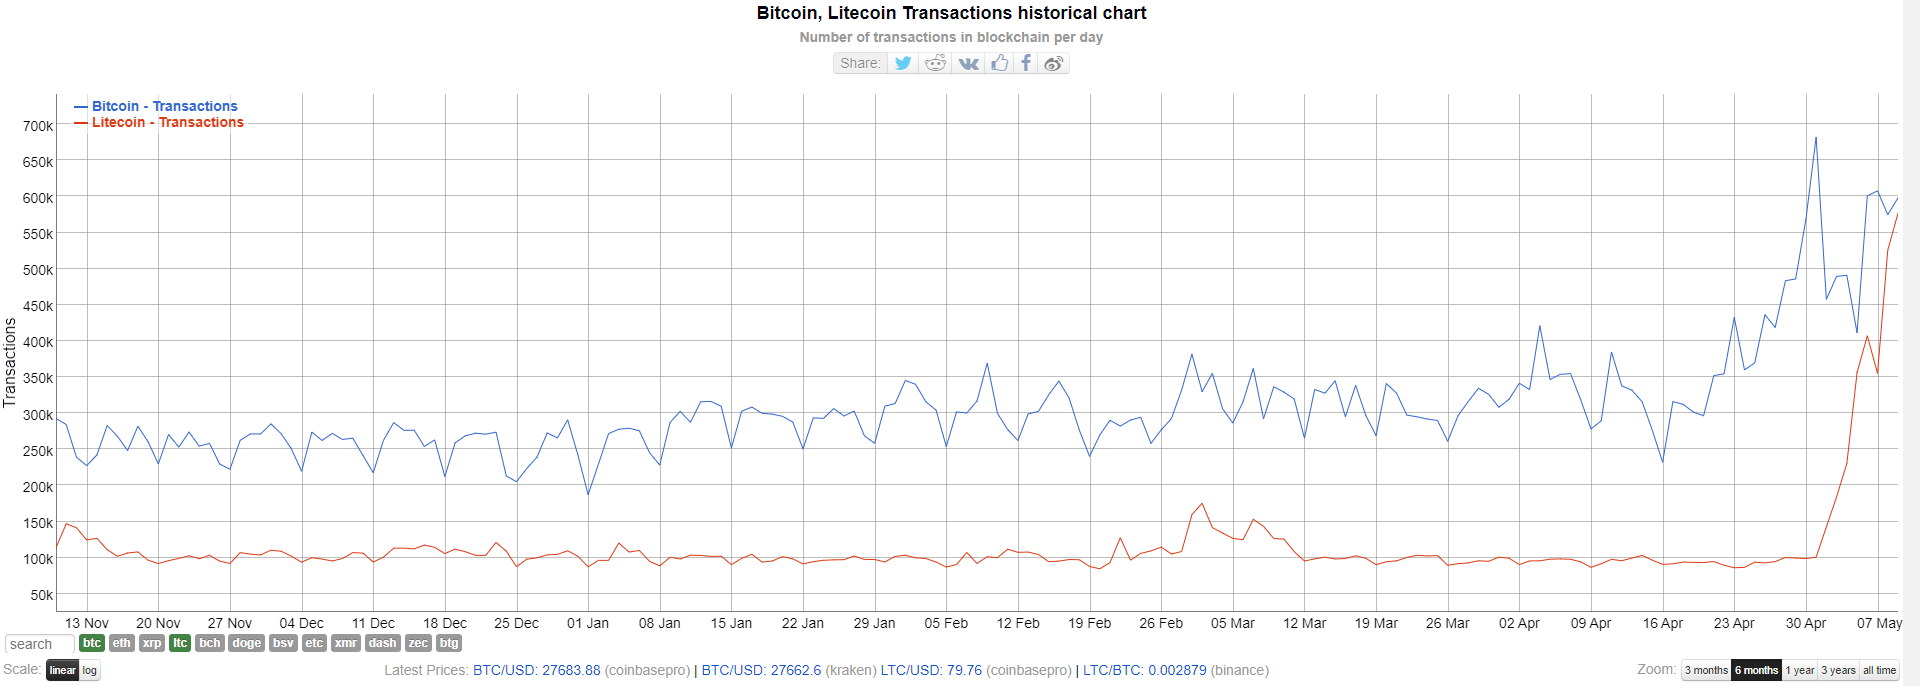 Litecoin vs Bitcoin Transactions - BitInfoCharts